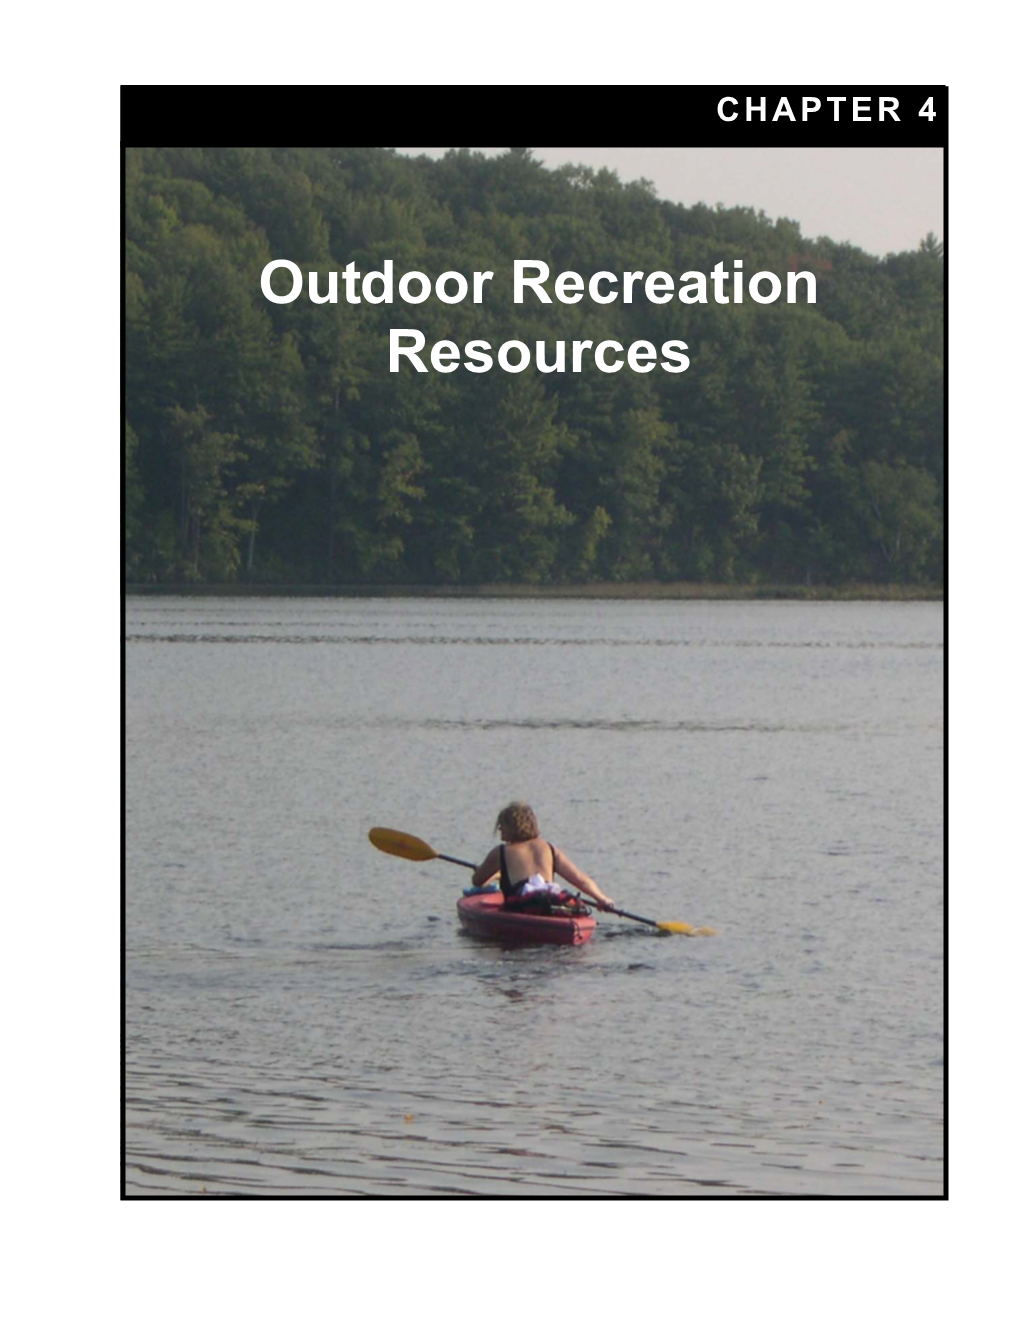 Outdoor Recreation Resources.Pub